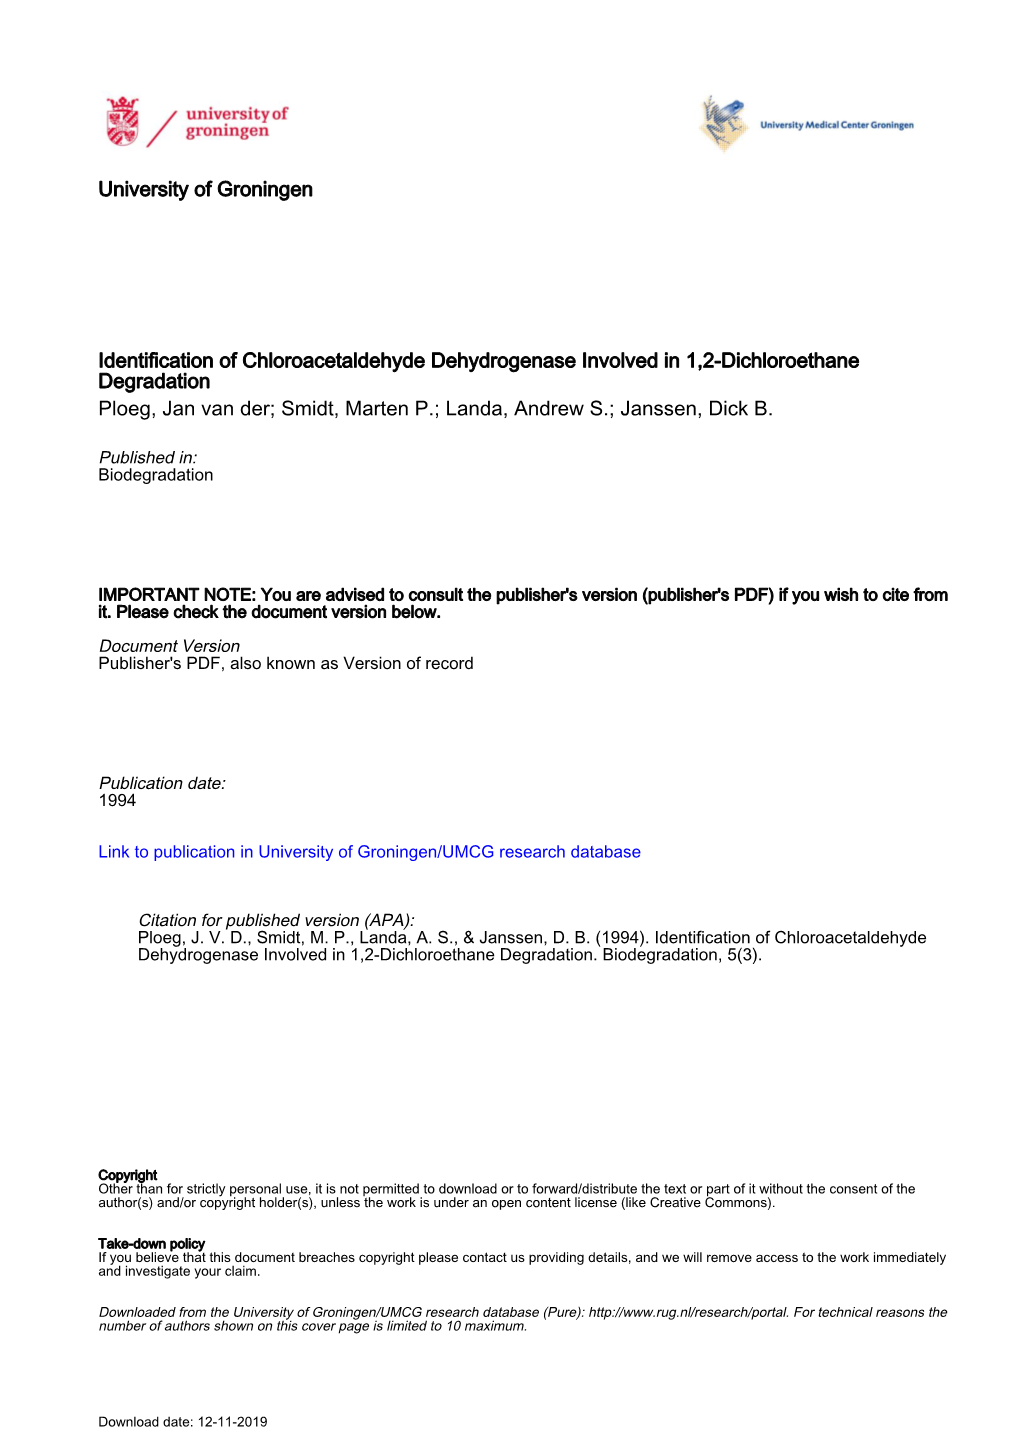 University of Groningen Identification of Chloroacetaldehyde